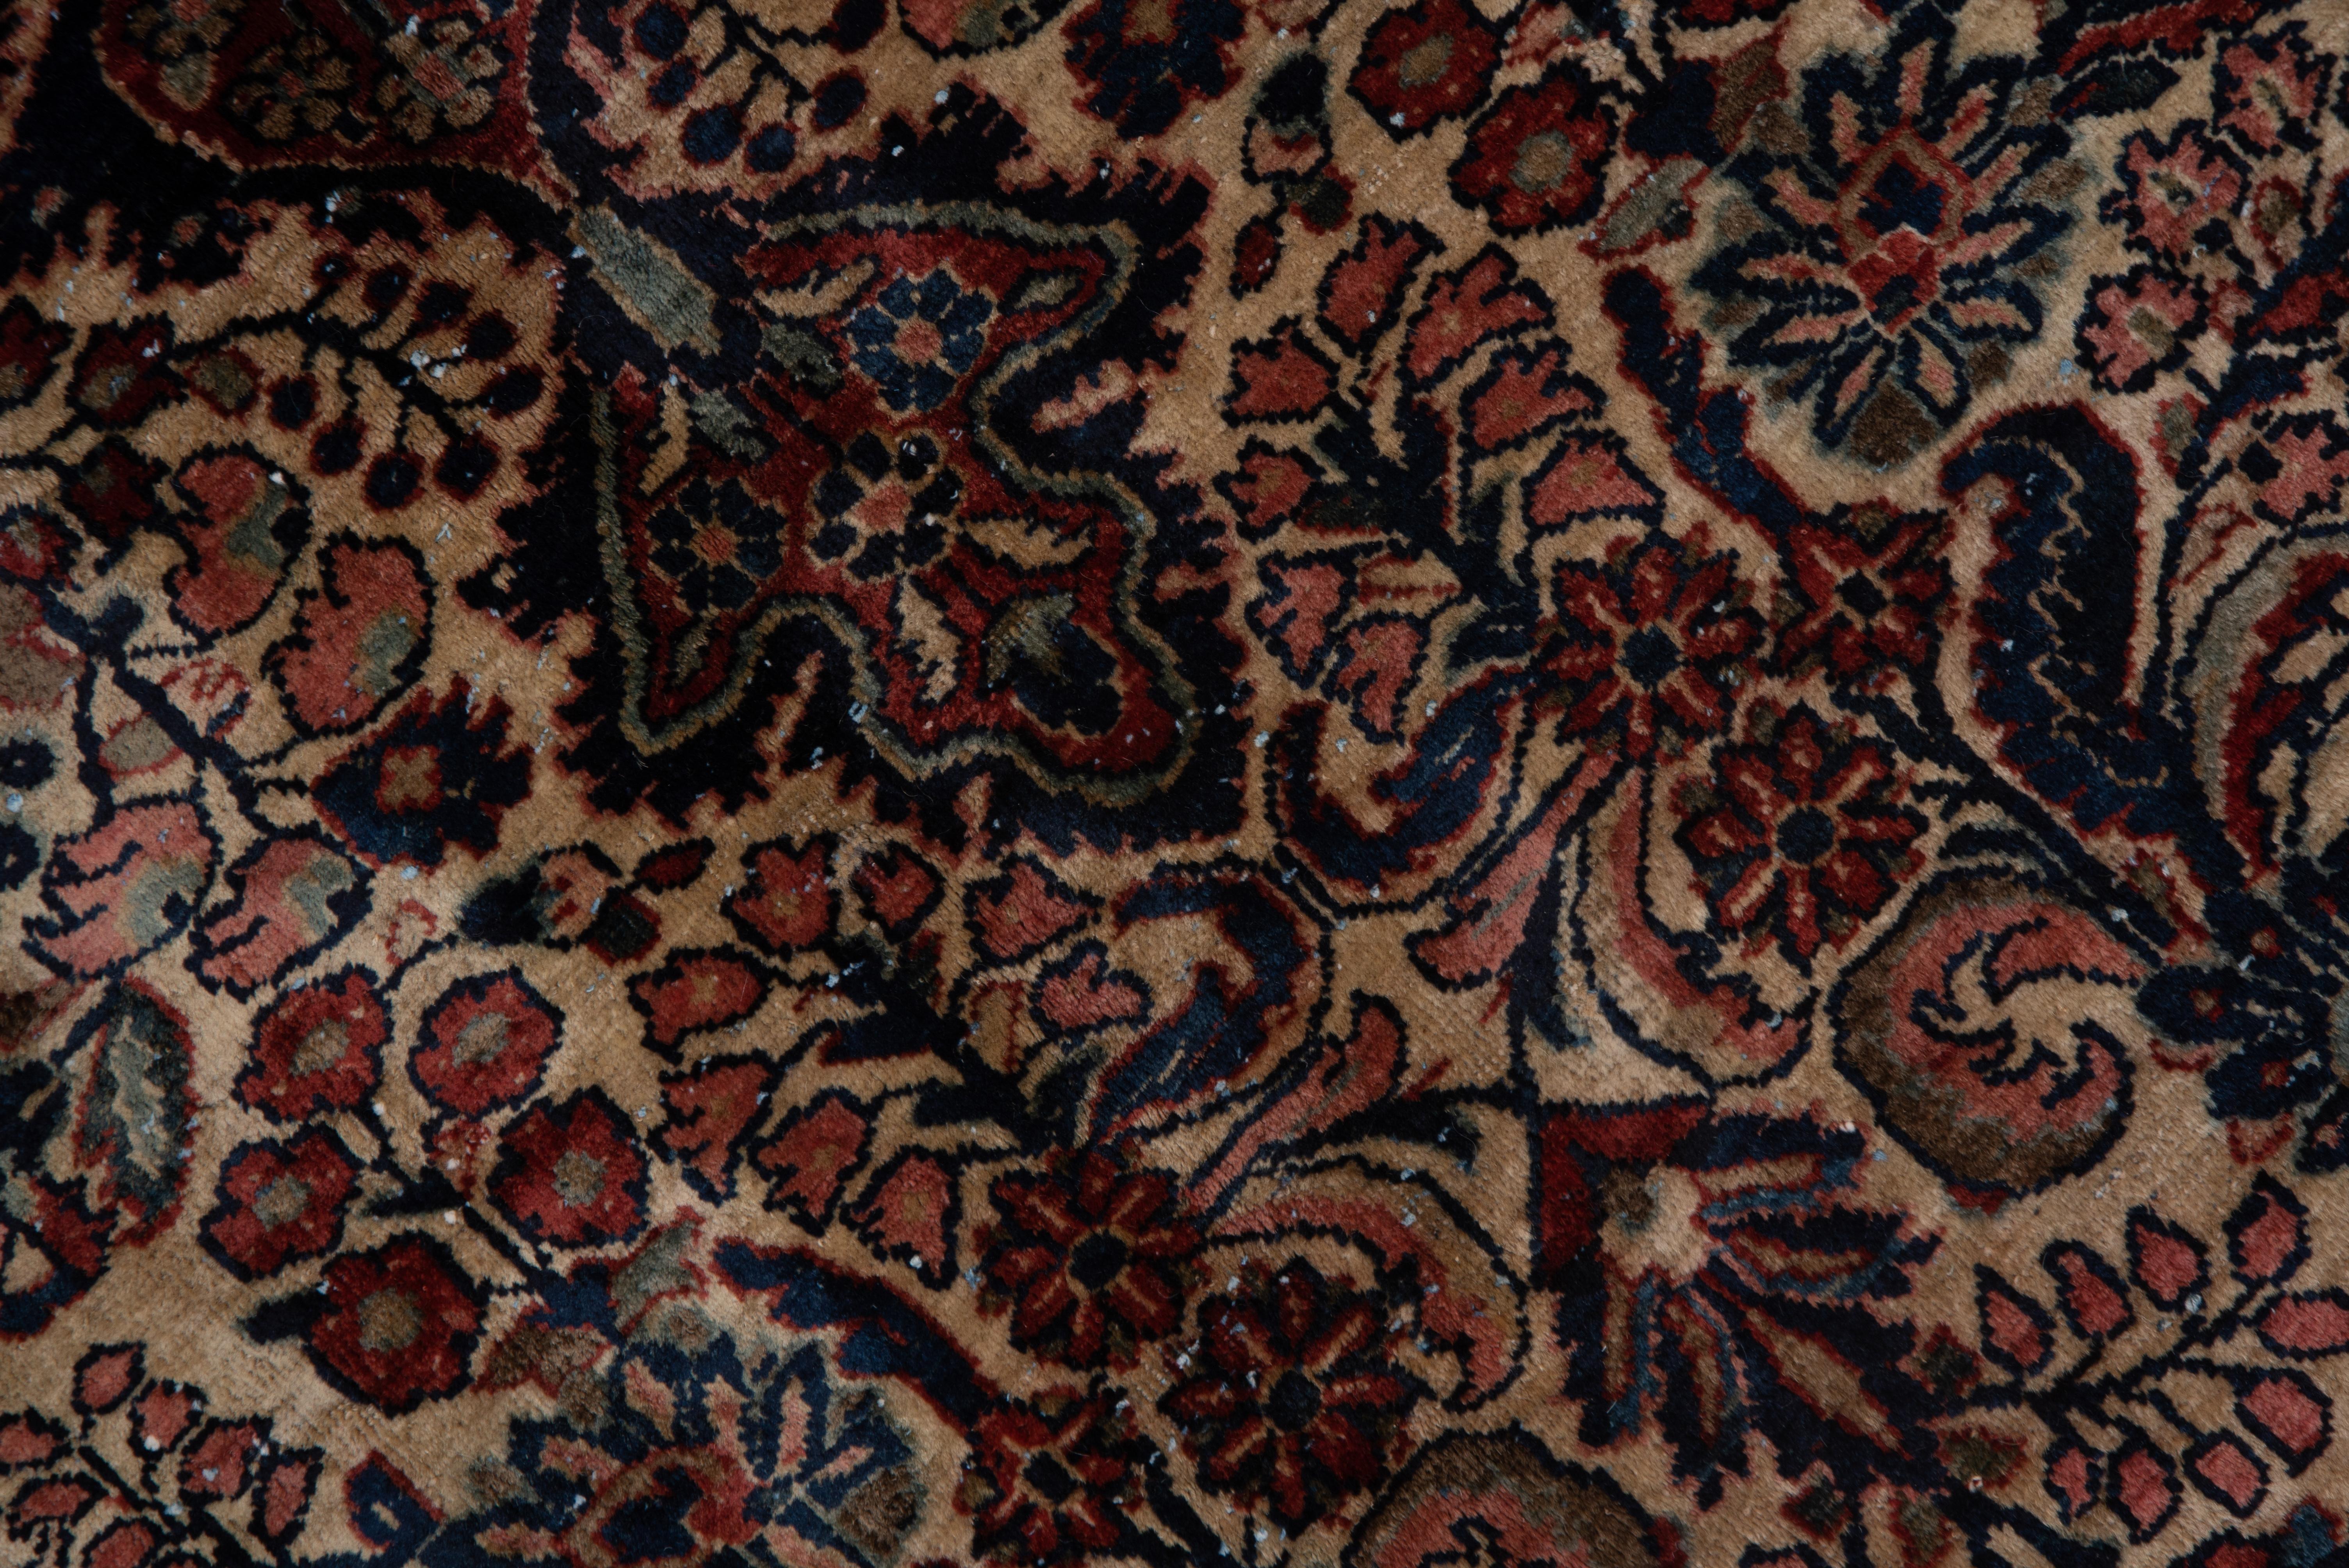 1930s rug